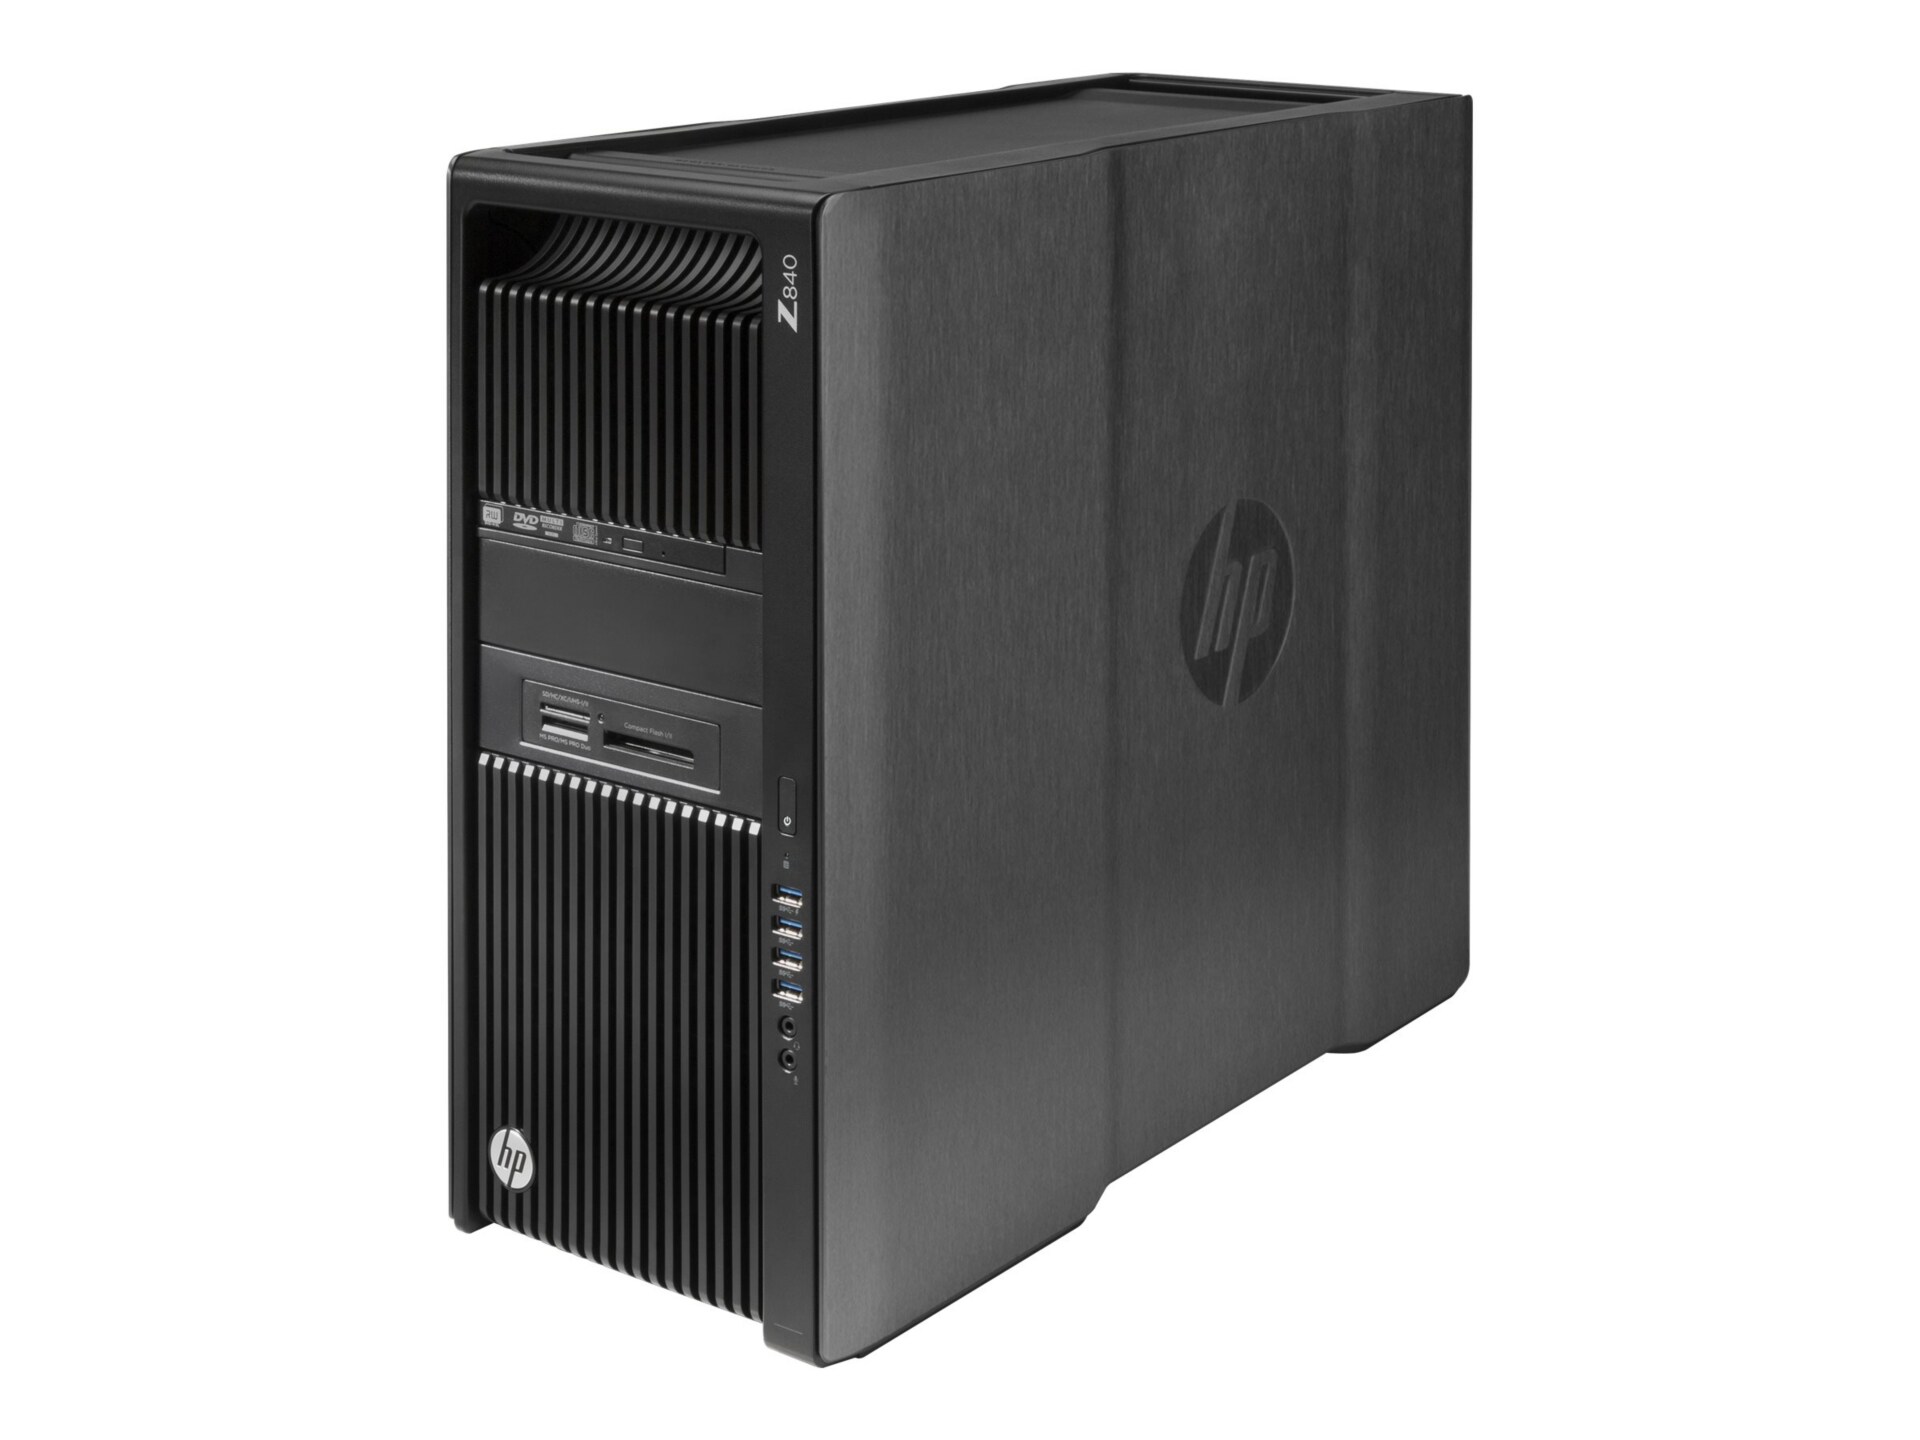 HP Workstation Z840 - tower - Xeon E5-2620V4 2.1 GHz - 16 GB - 256 GB - US